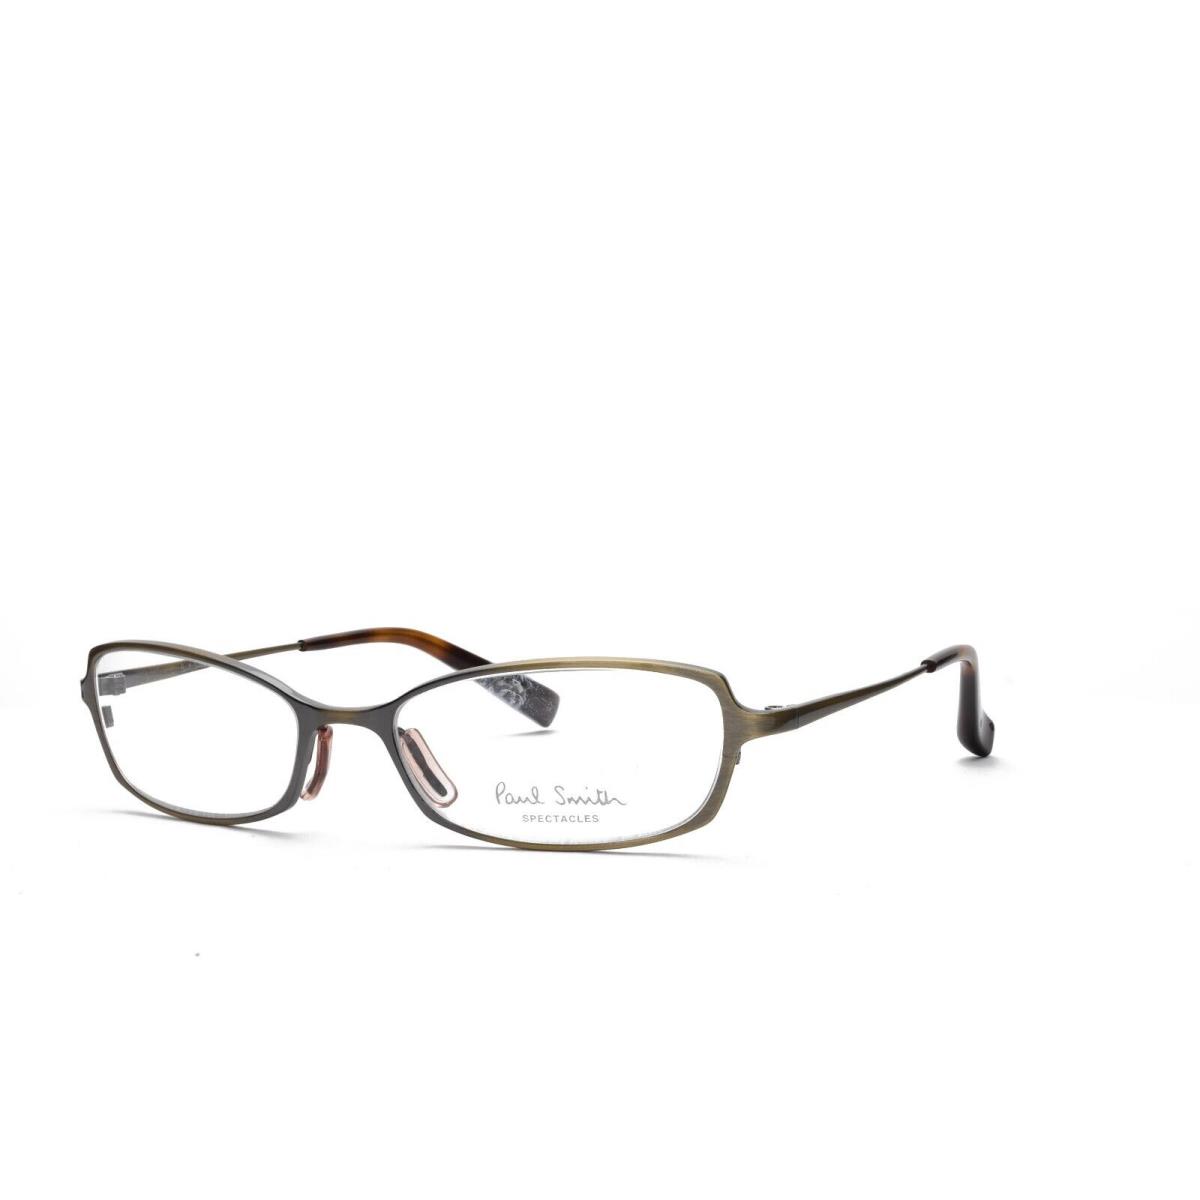 Paul Smith 188 SD 51-16-130 Bronze Vtg Vintage Eyeglasses Frames Titanium